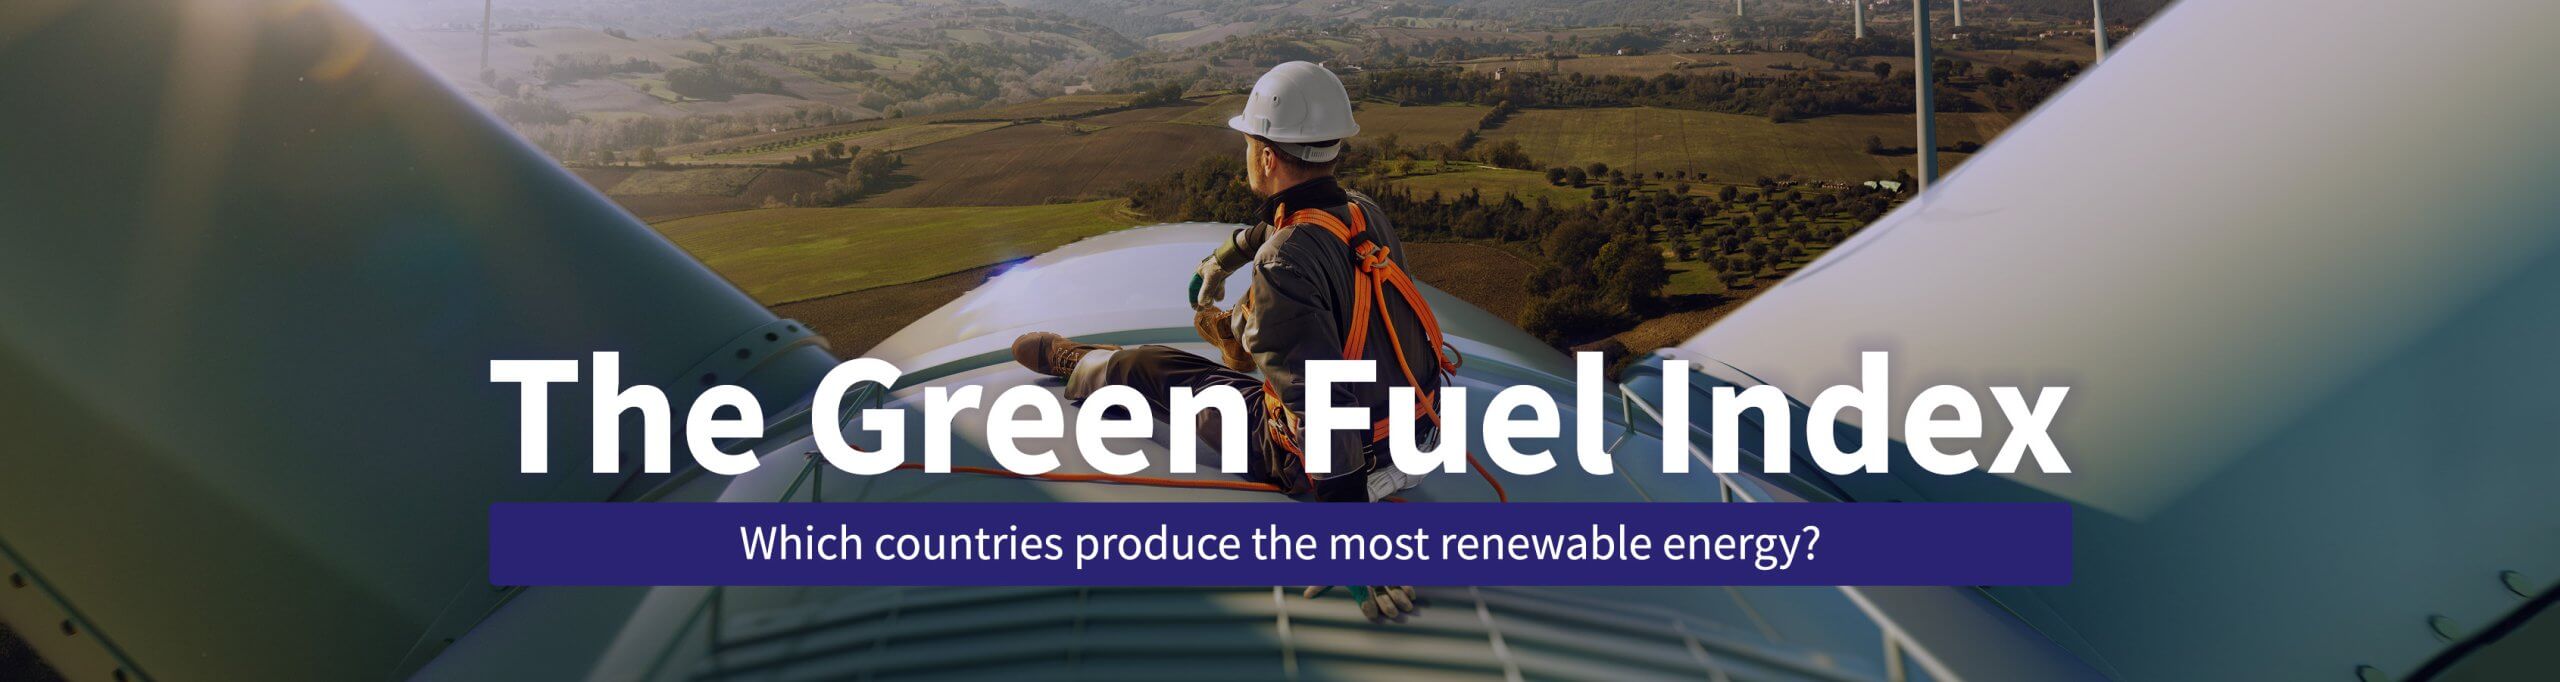 The Green Fuel Index head